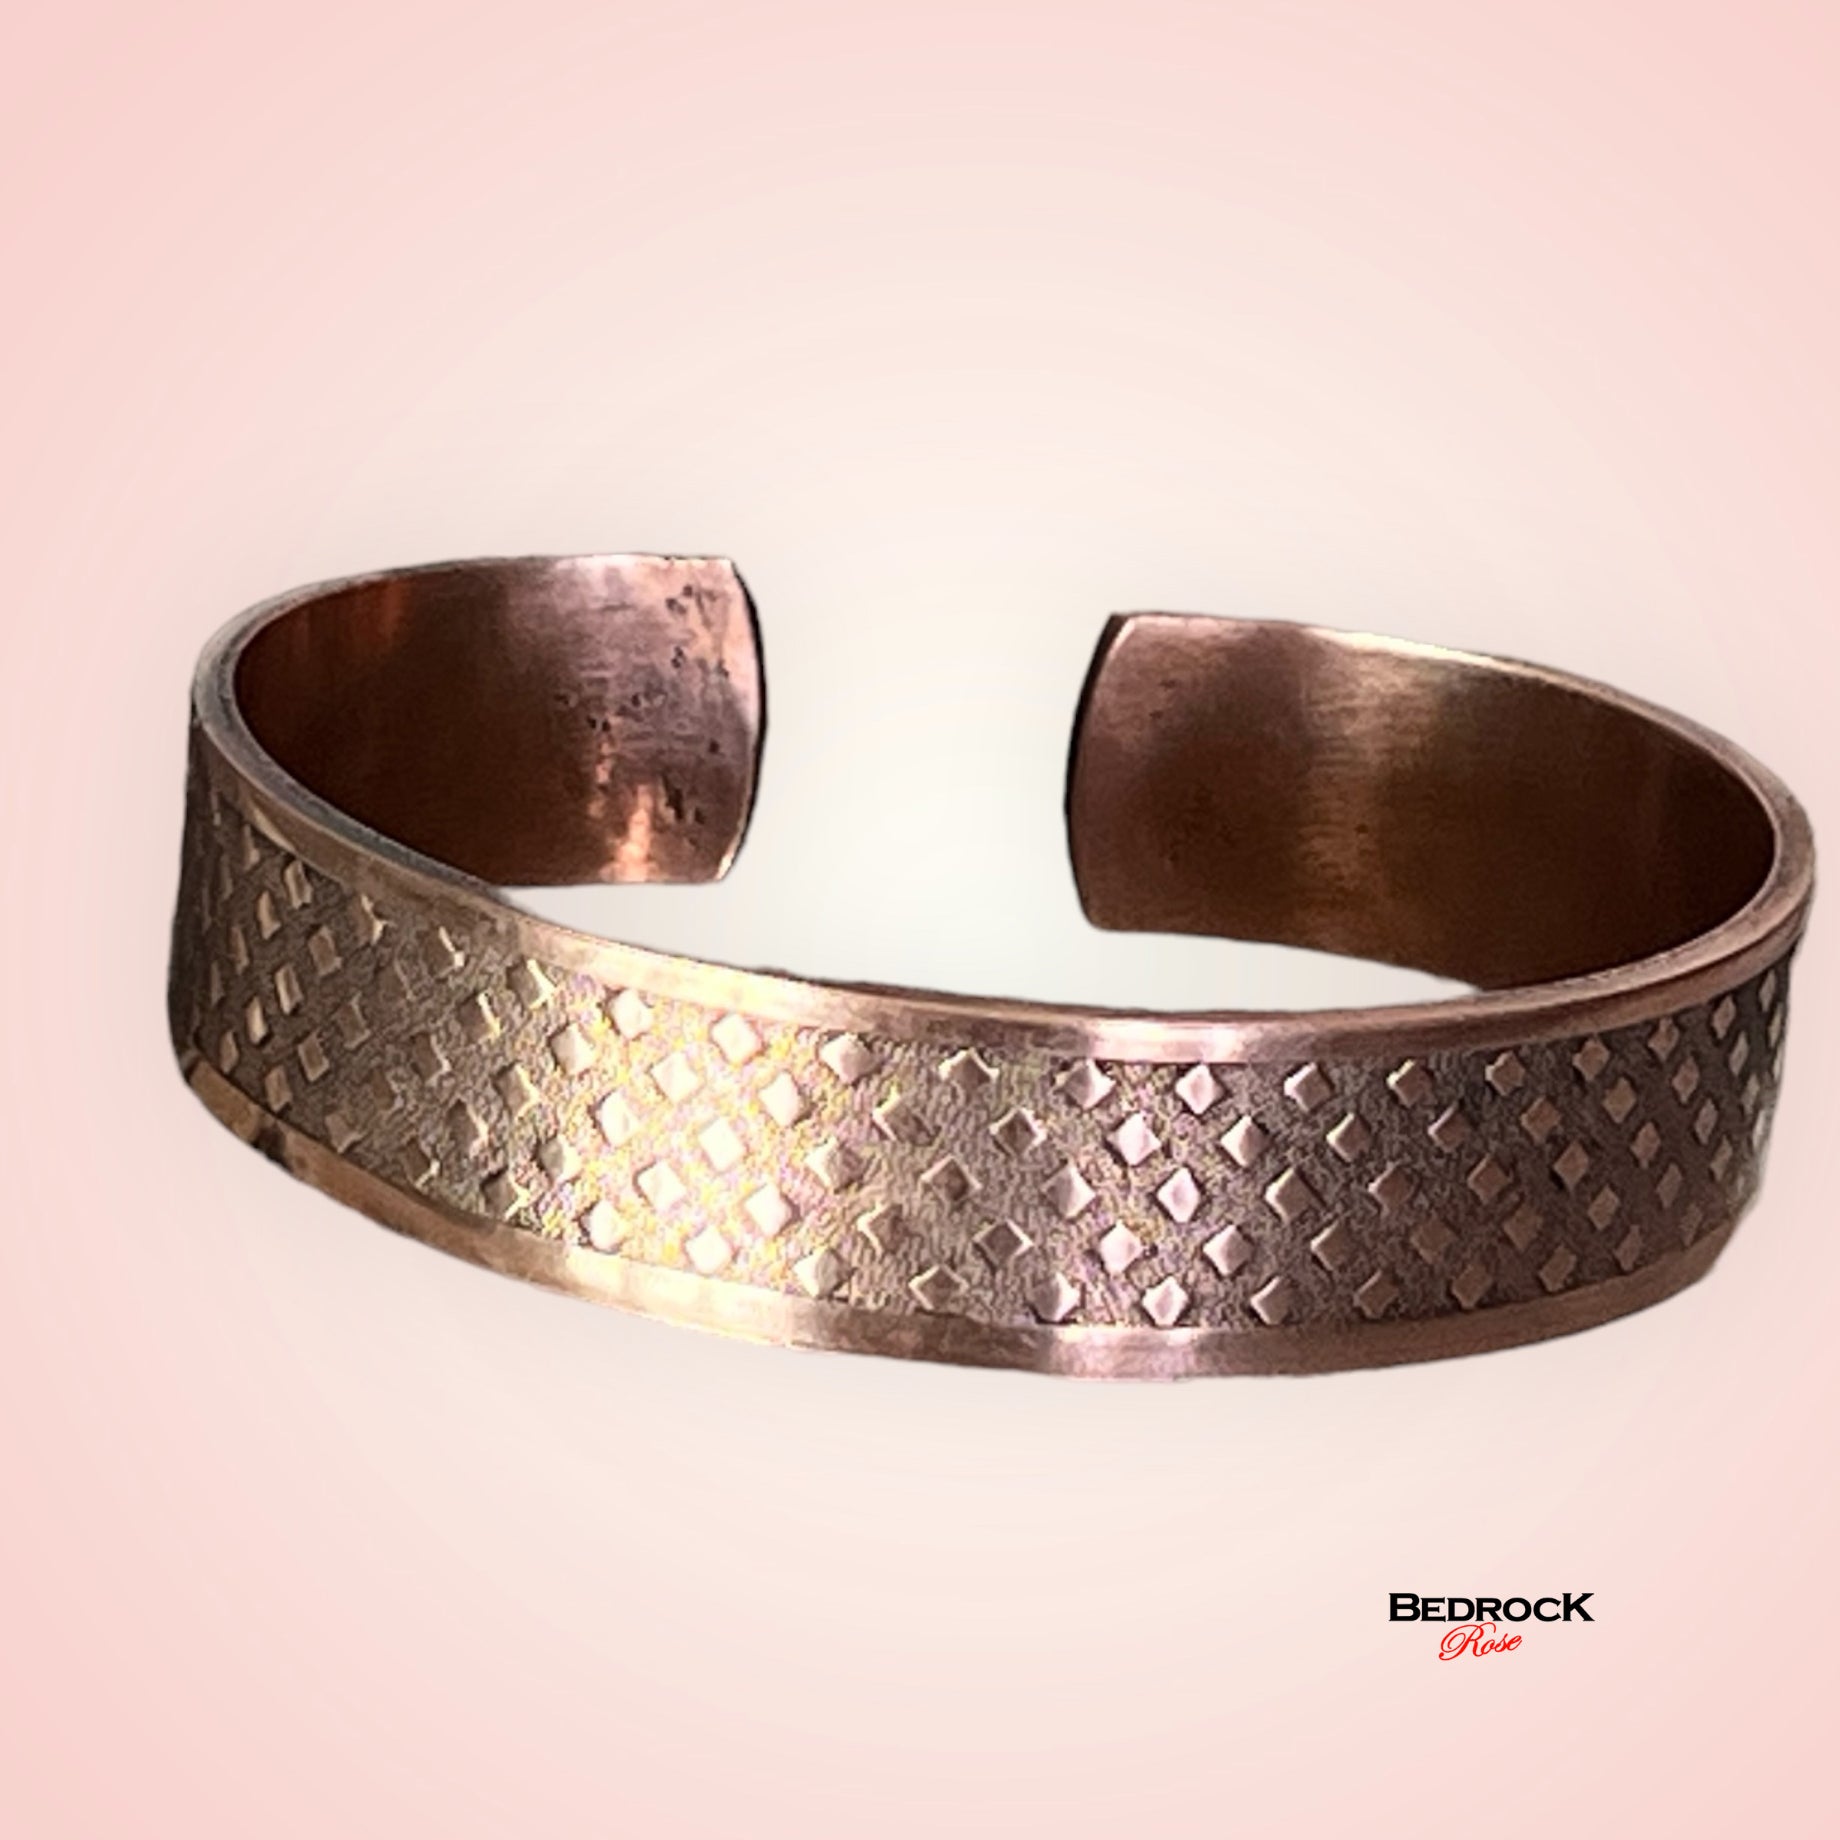 Ombre Effect Diamond Texture Copper Cuff, Copper Bracelet, Arthritis Aid Copper Jewelry, High Shine Copper Cuff, High Shine Textured Copper Bracelet, Gift for Her